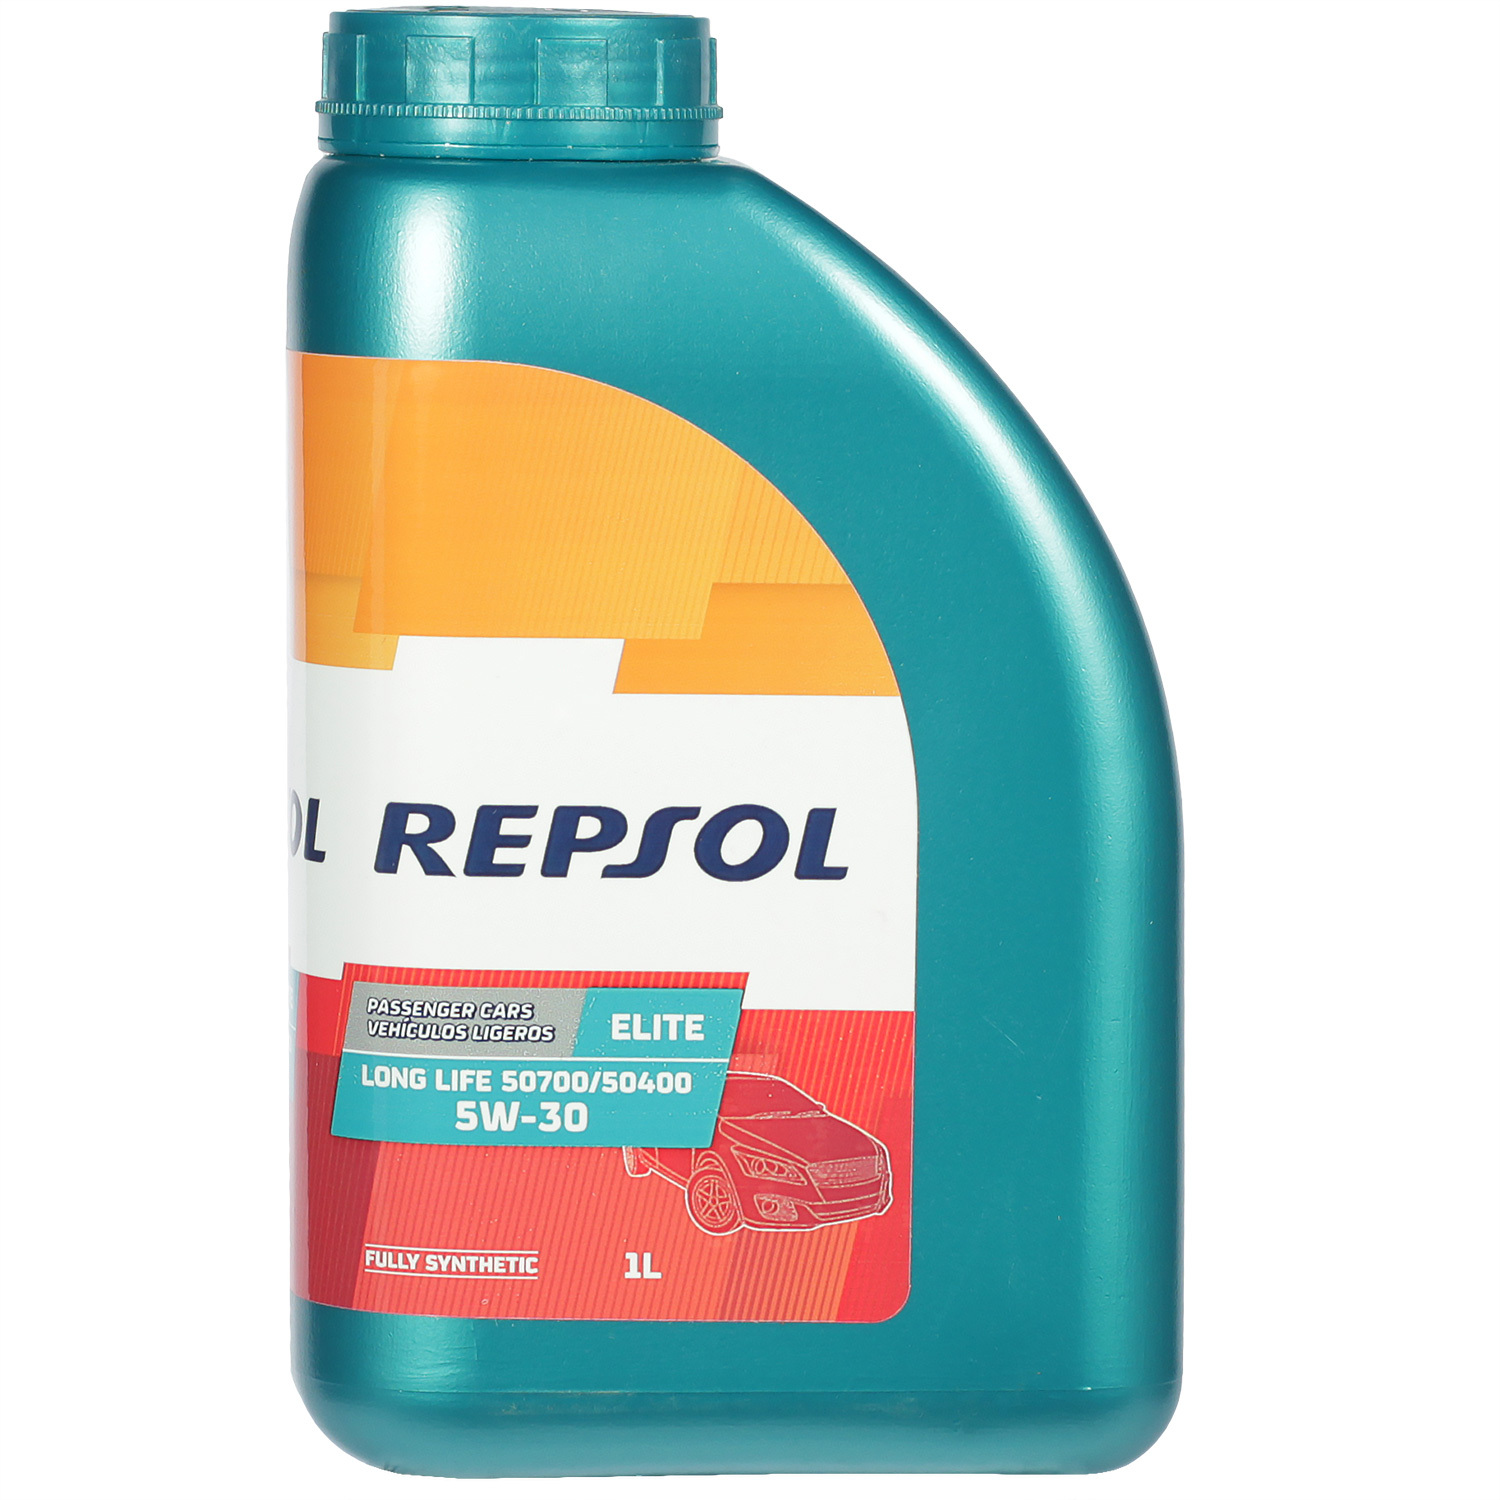 Repsol Моторное масло Repsol Elite LONG LIFE 50700/50400 5W-30, 1 л repsol моторное масло repsol elite cosmos f fuel economy 5w 30 1 л